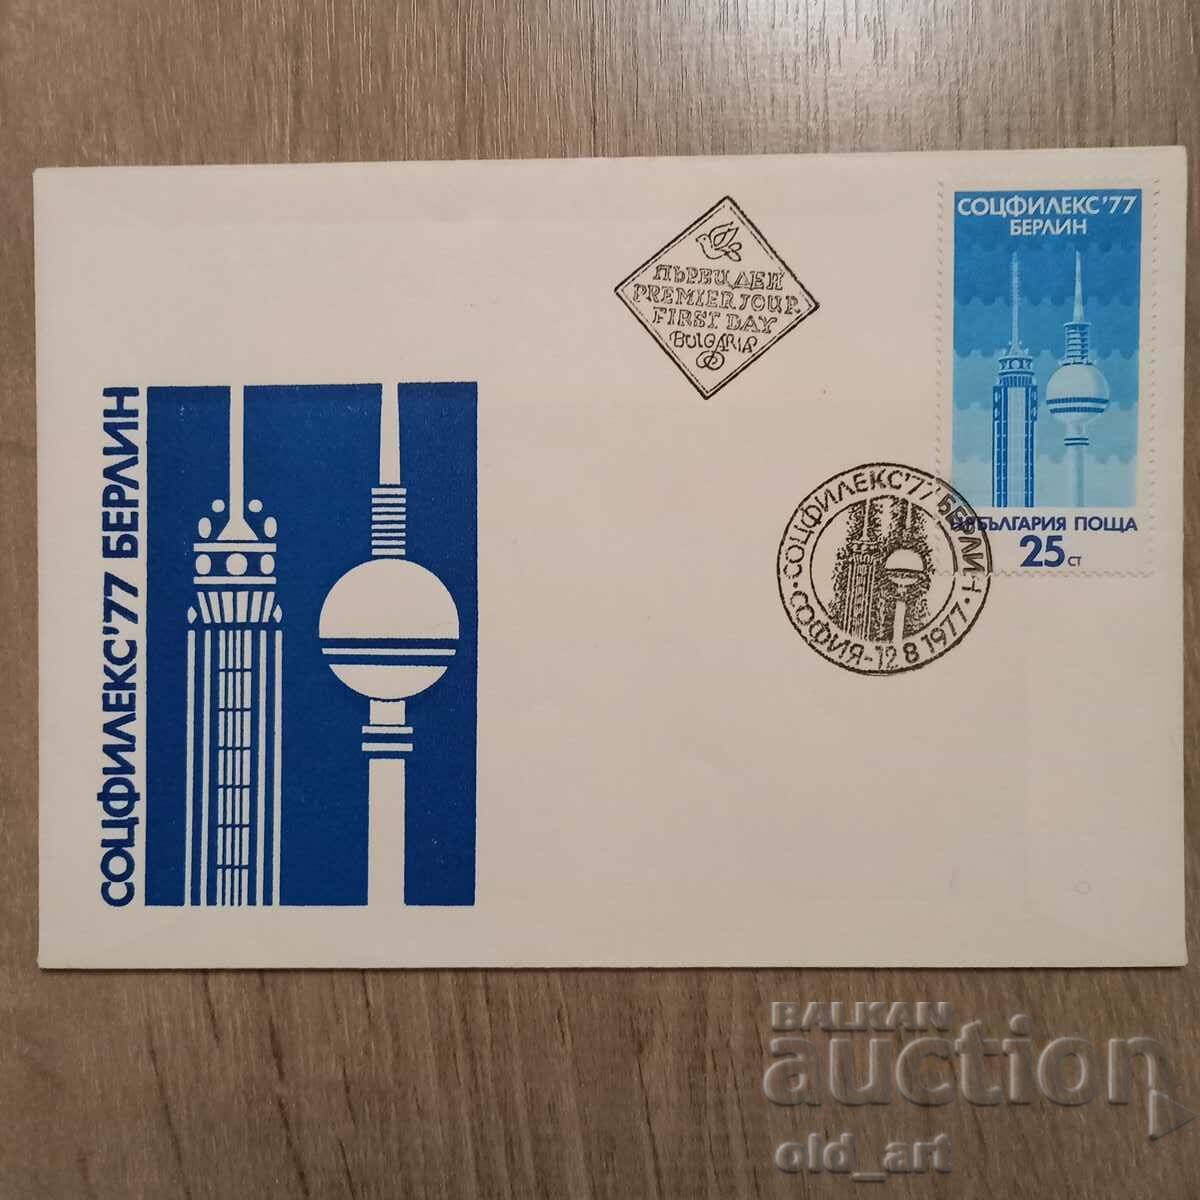 Postal envelope - Socialflex 77 Berlin